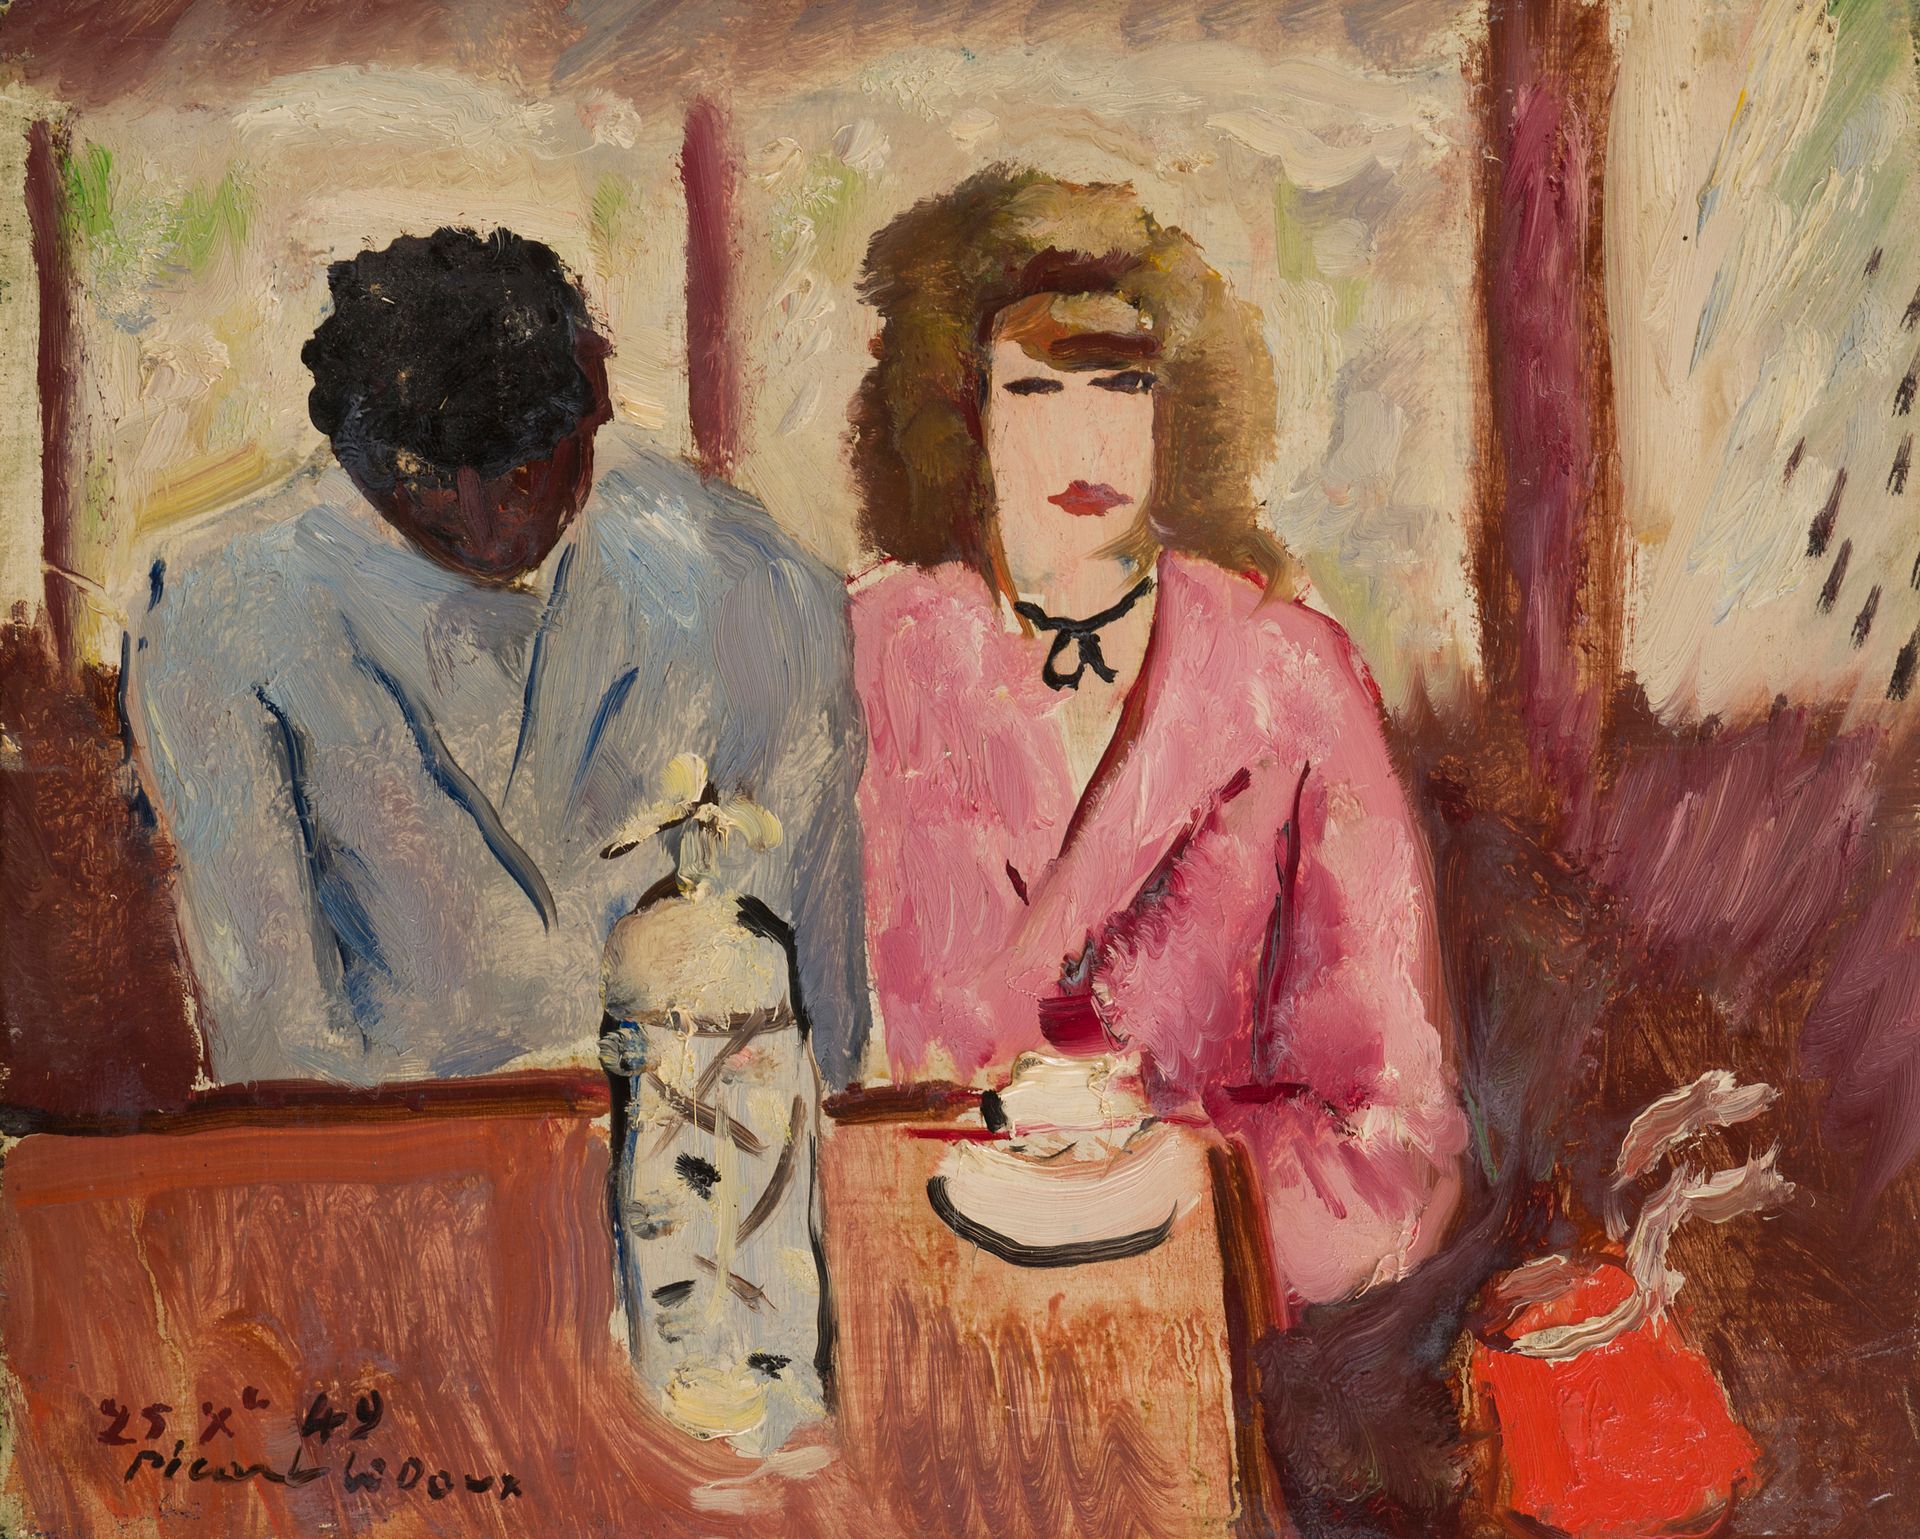 Null 查尔斯-皮卡特-勒杜 (1881-1959)
黑与白，1949年
面板油画，左下方有签名和日期25-7-49
22 x 27 cm